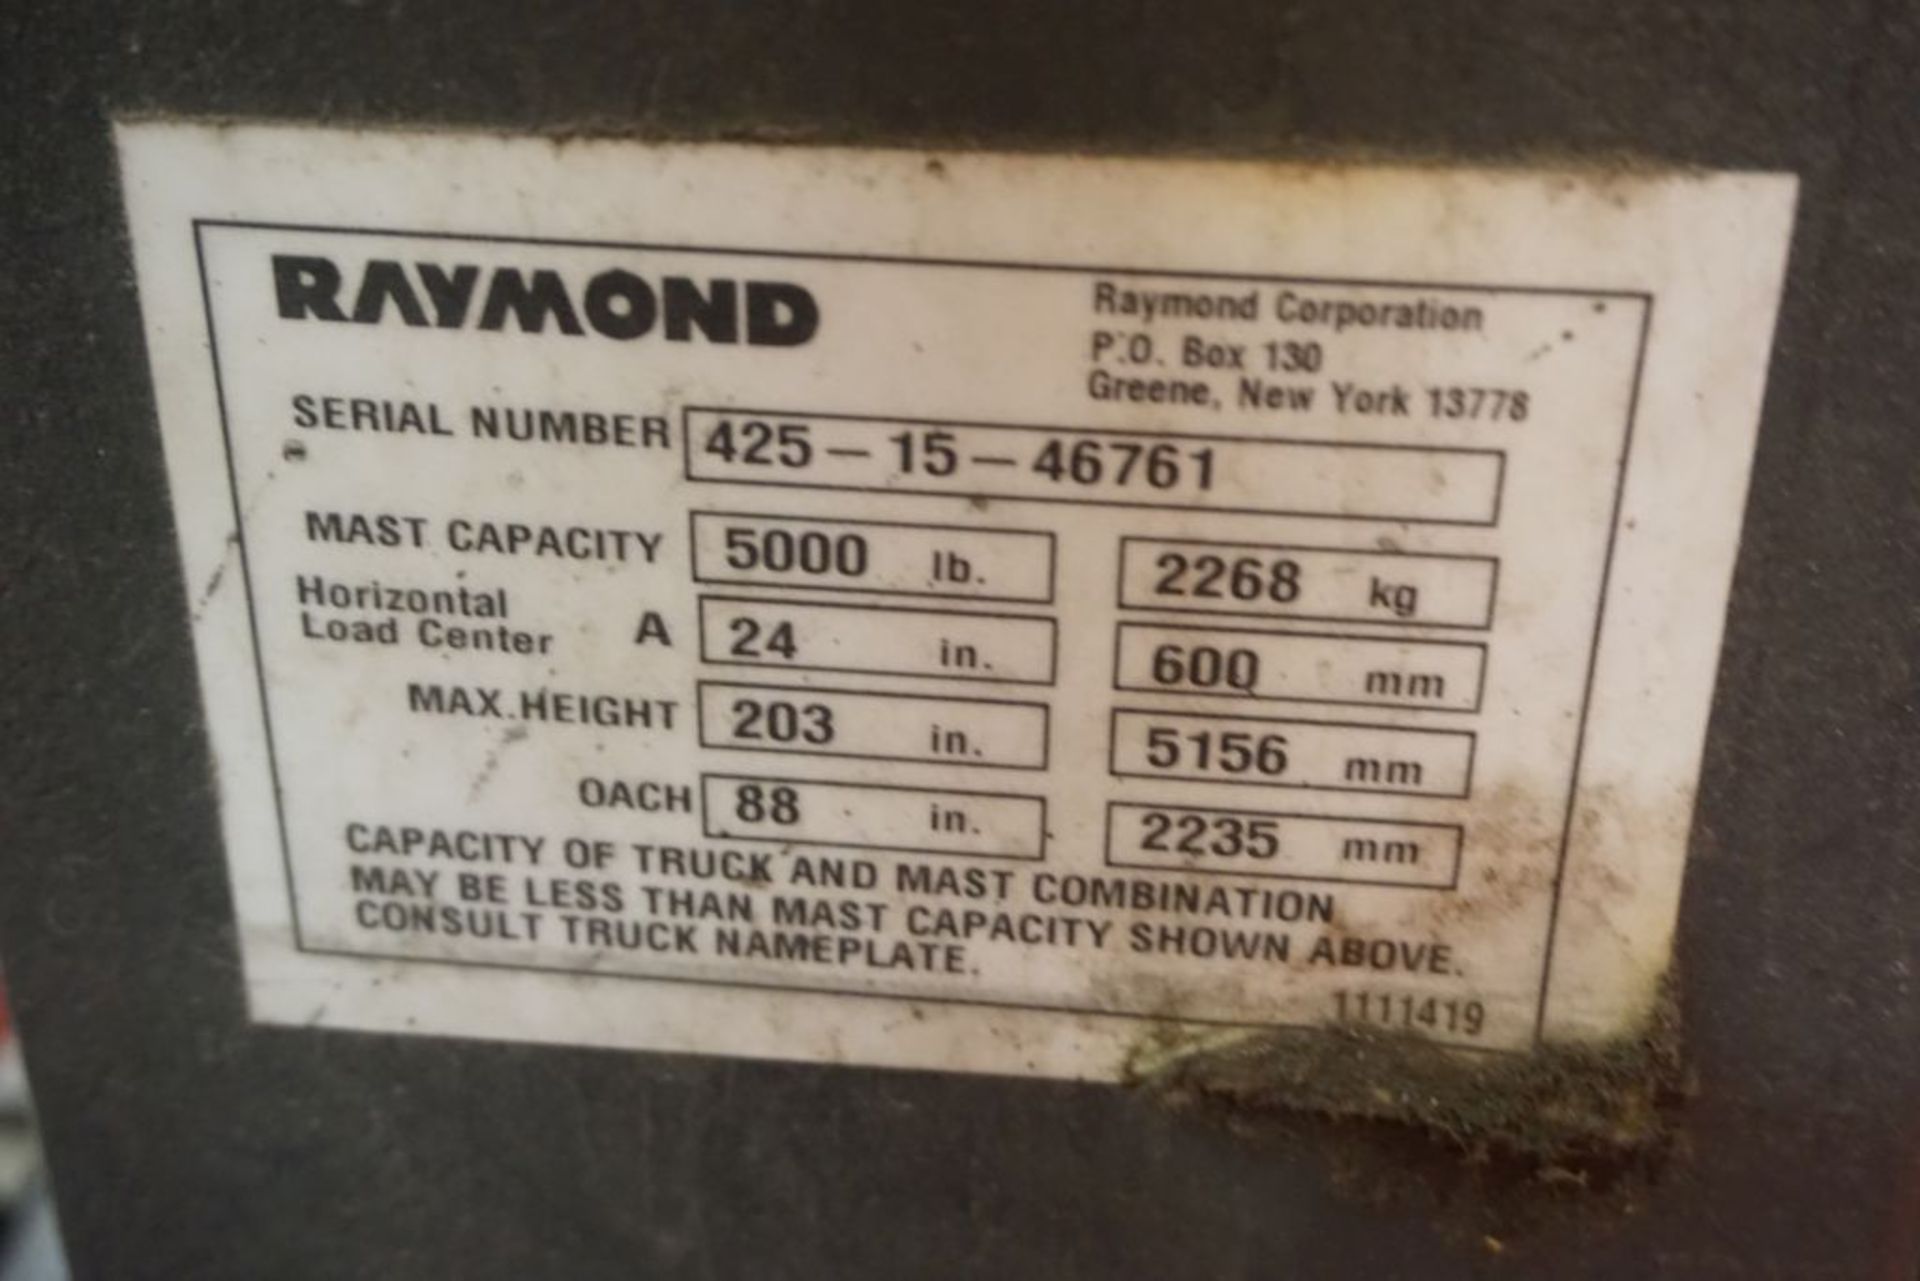 Raymond 425 C40TT Docker Stand Up Electric Forklift - Model No. 425-C40TT; Serial No. 425-15- - Image 32 of 36